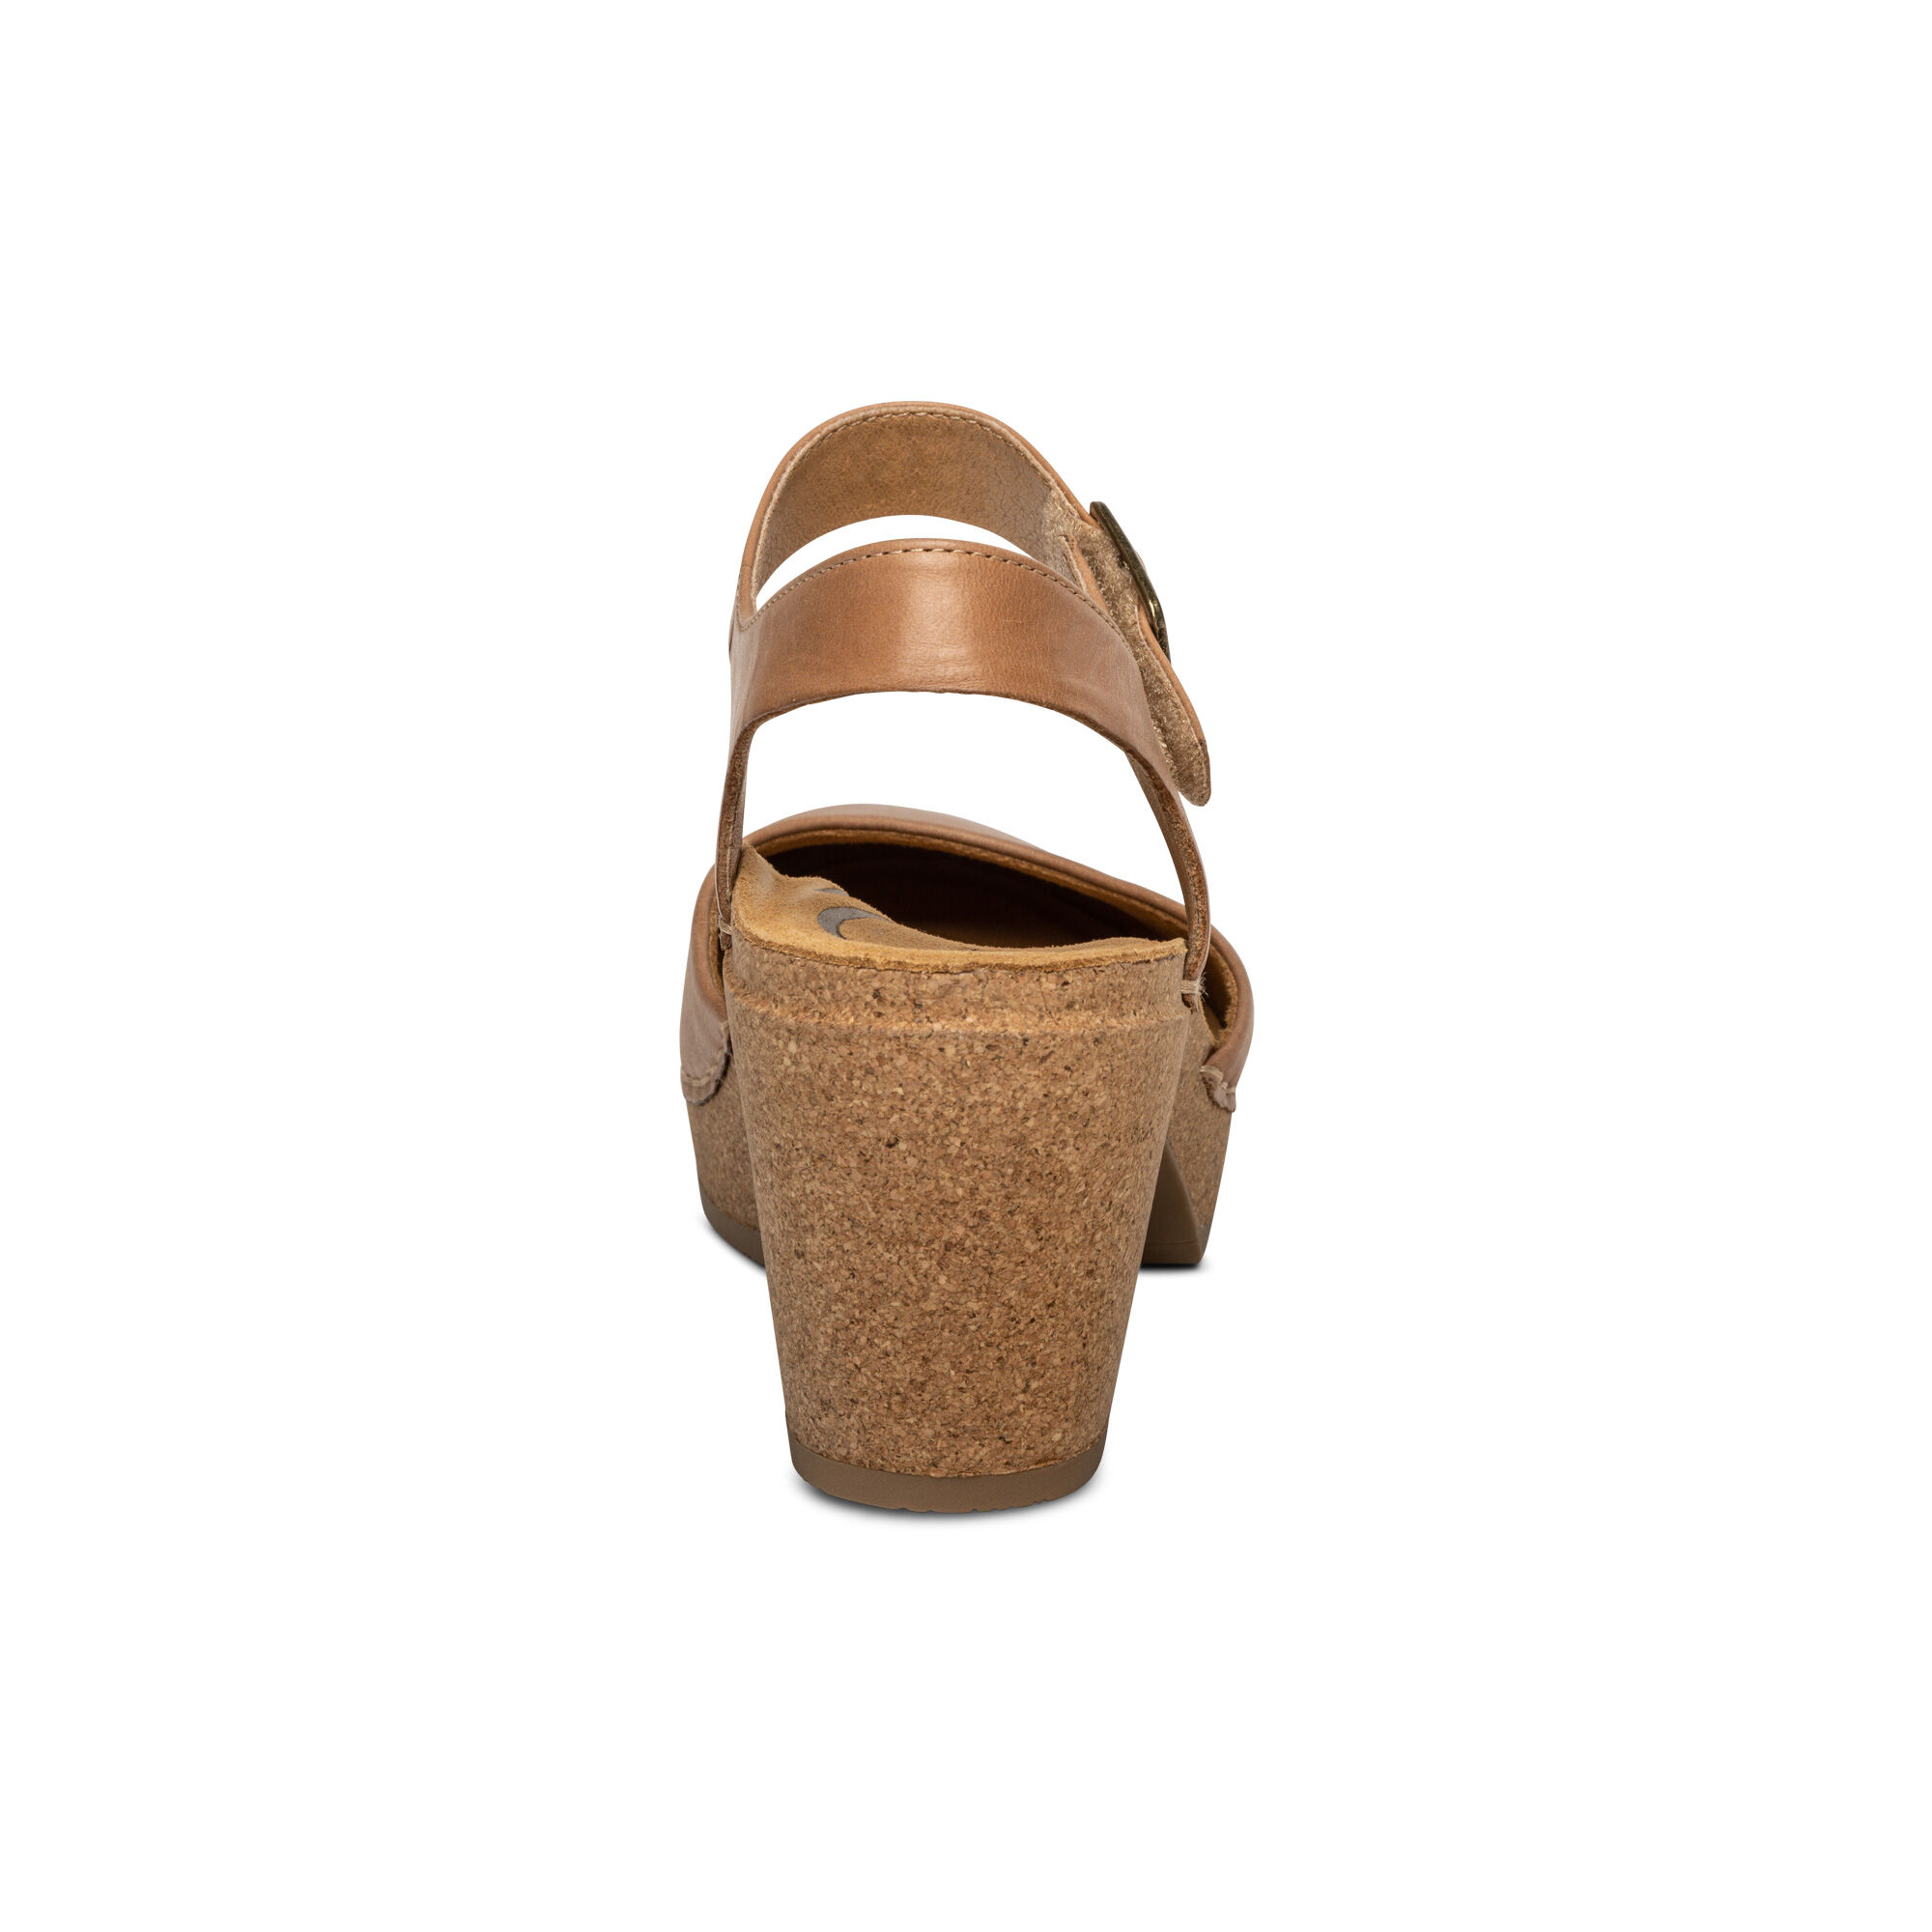 Comfortable Platform Wedge Sandals | Summer Wedge Heel Sandals - OTBT shoes